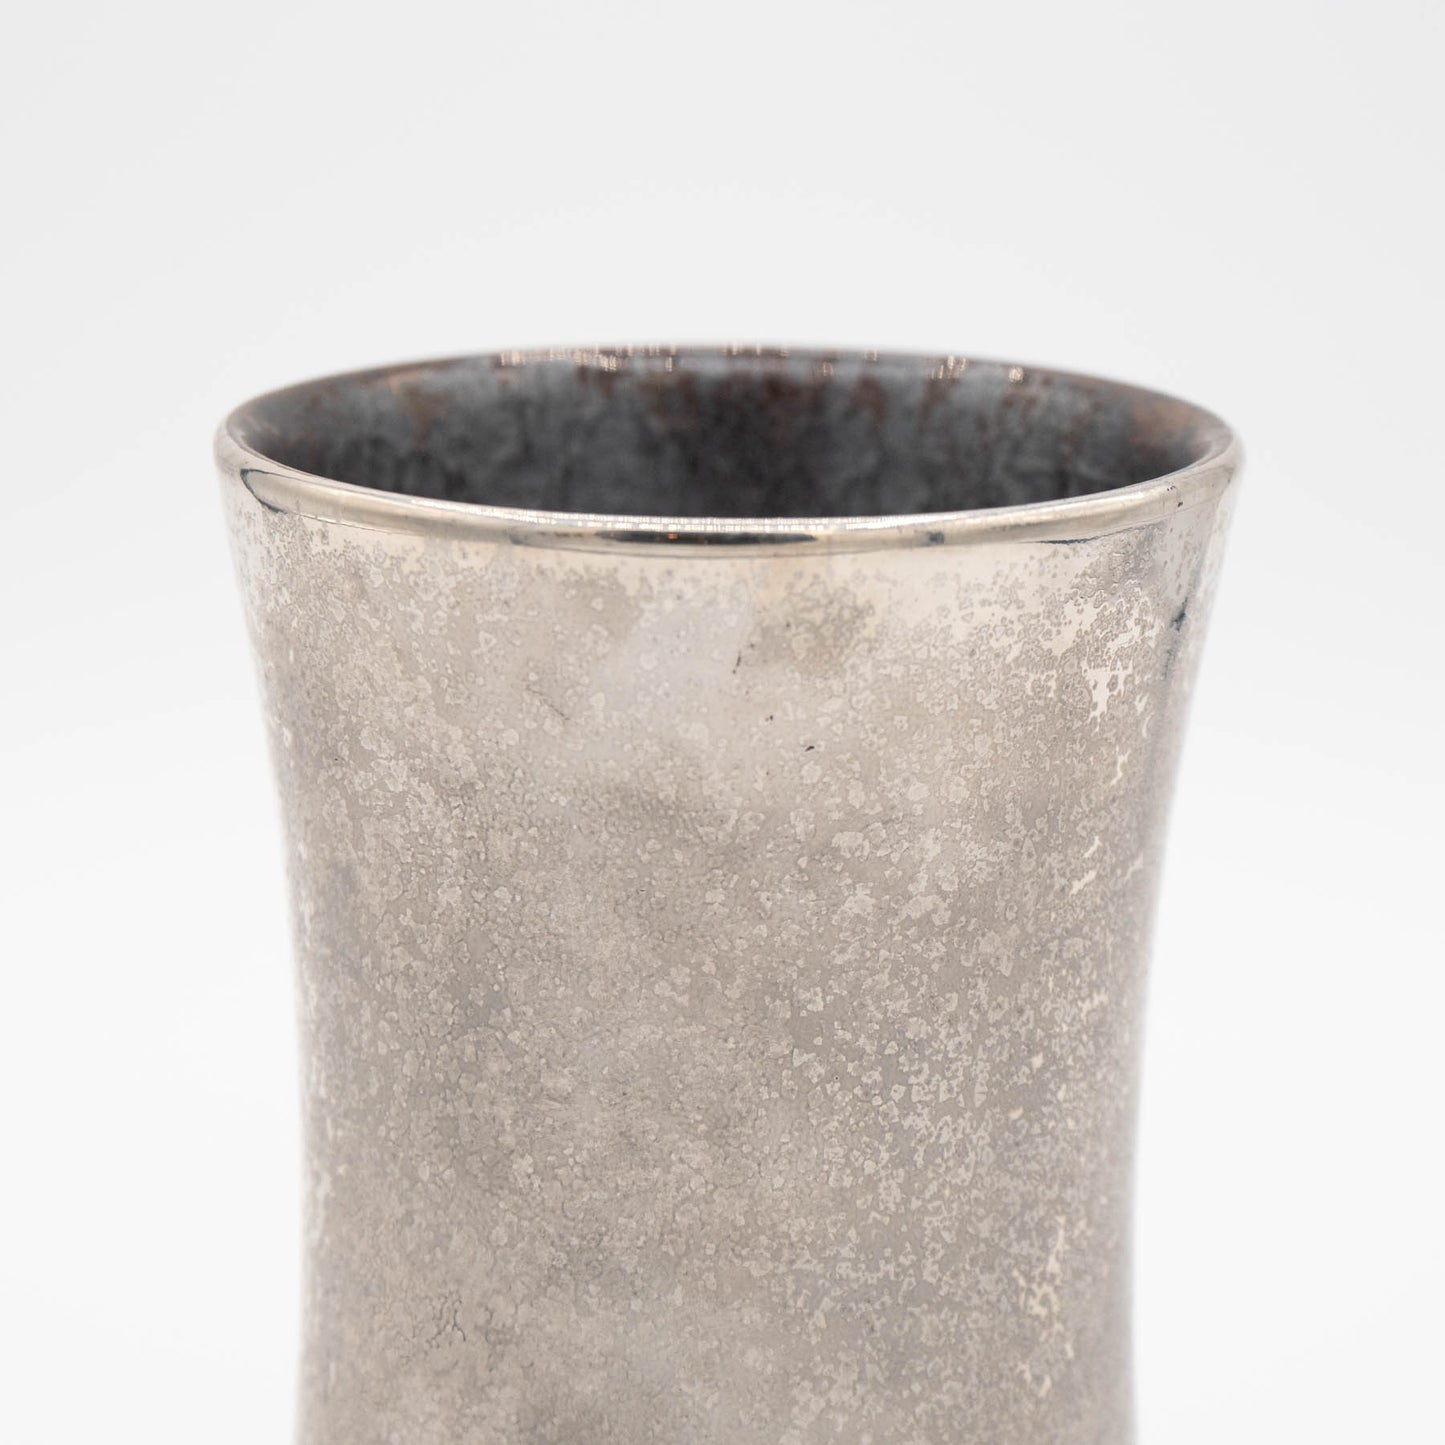 Arita yaki porcelain -Sake glass cup- platinum